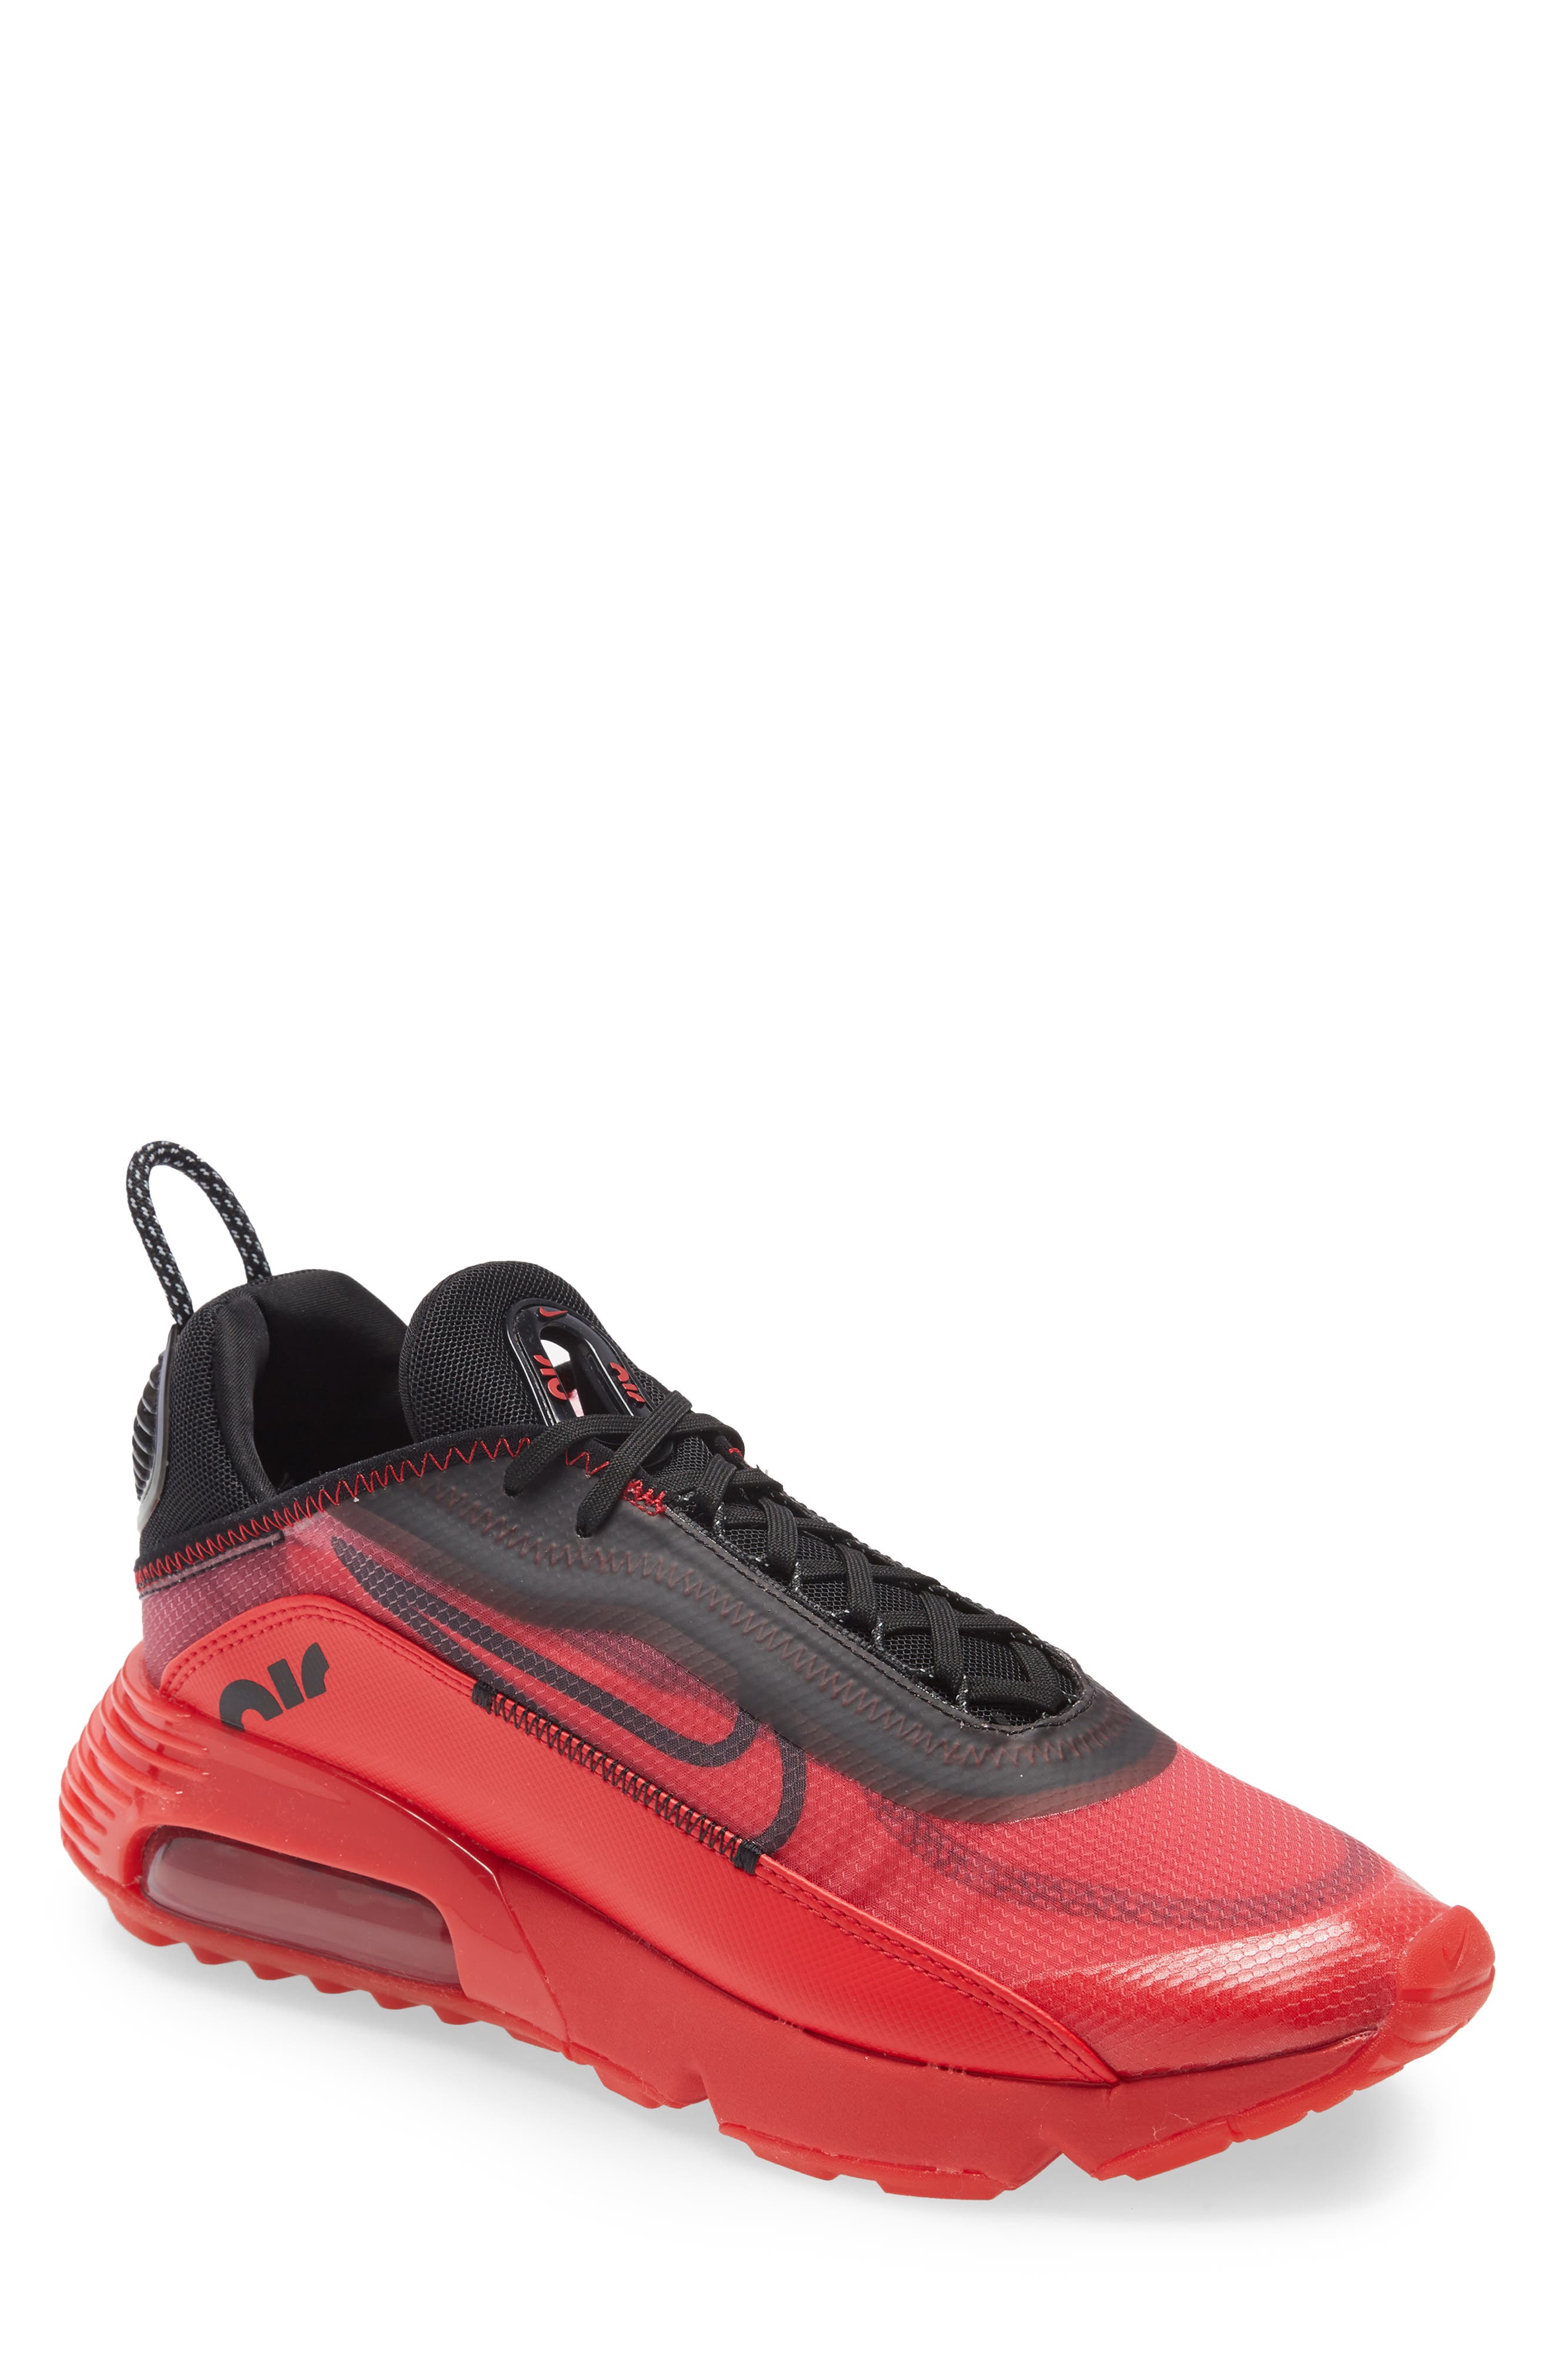 Men's Red Nike Shoes | Nordstrom